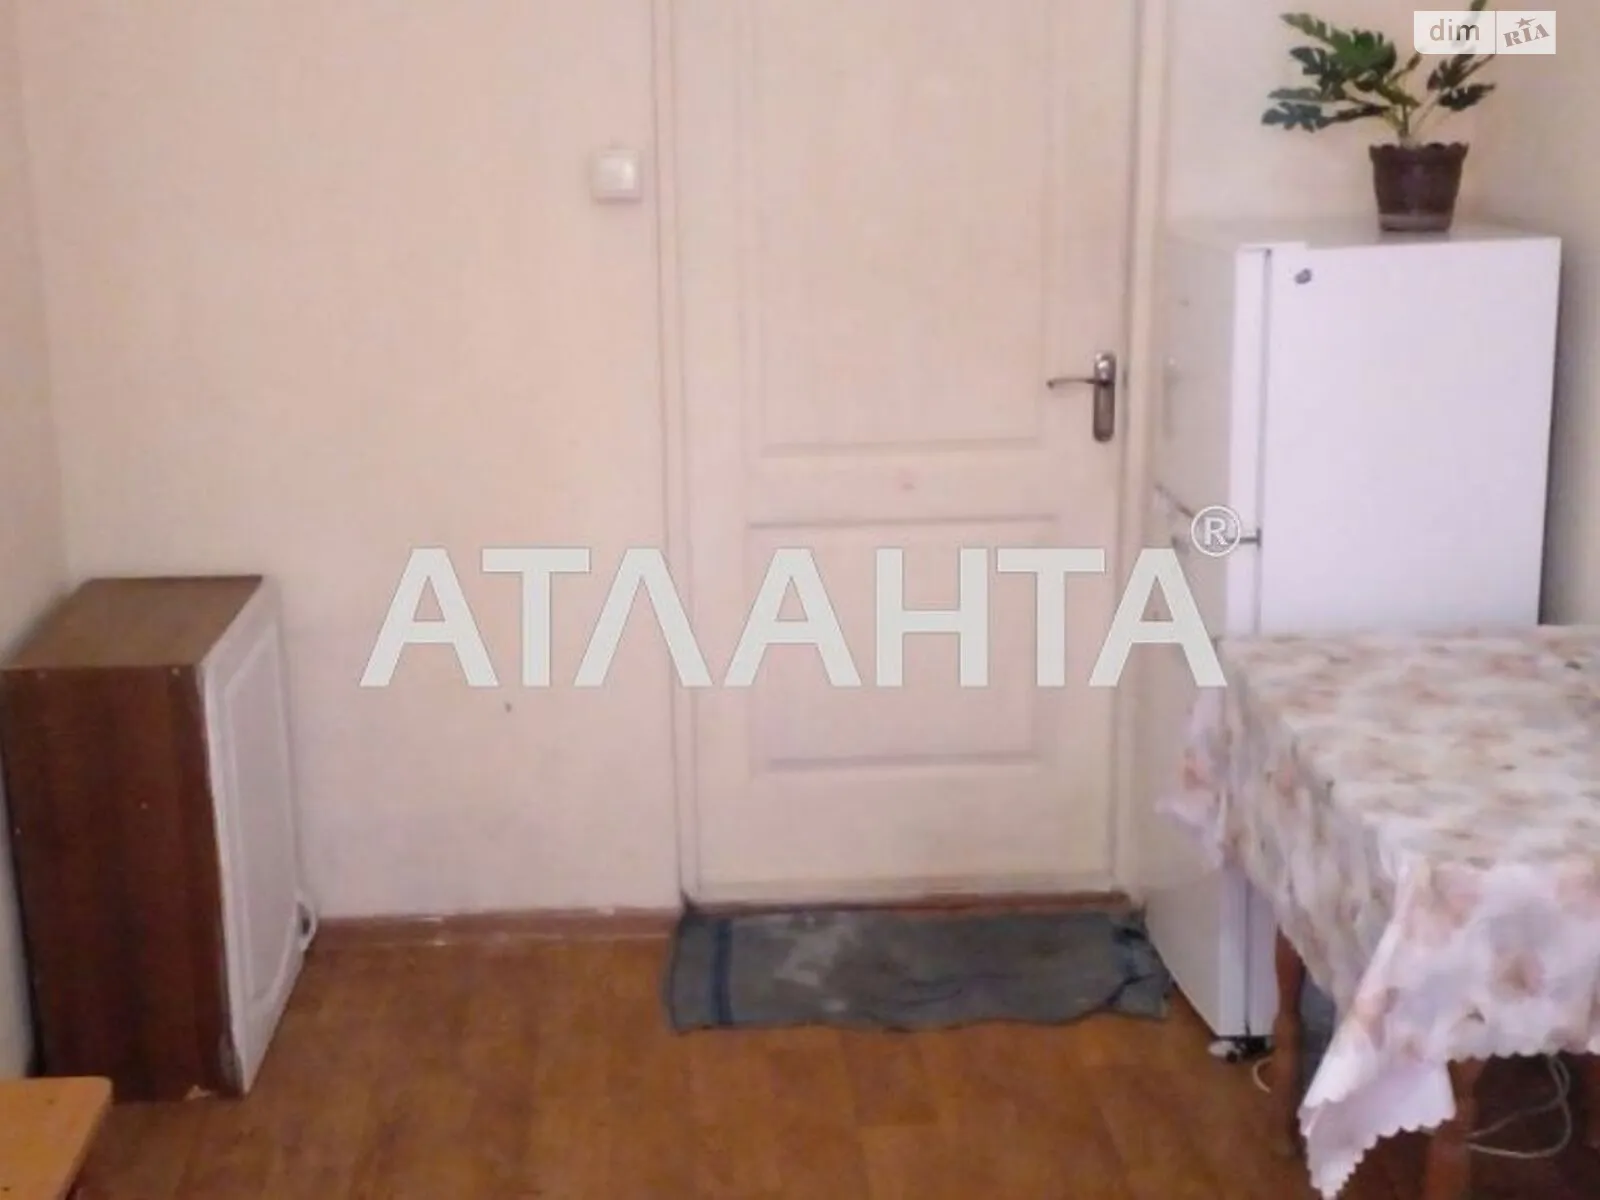 Продается комната 9 кв. м в Одессе, цена: 6700 $ - фото 1